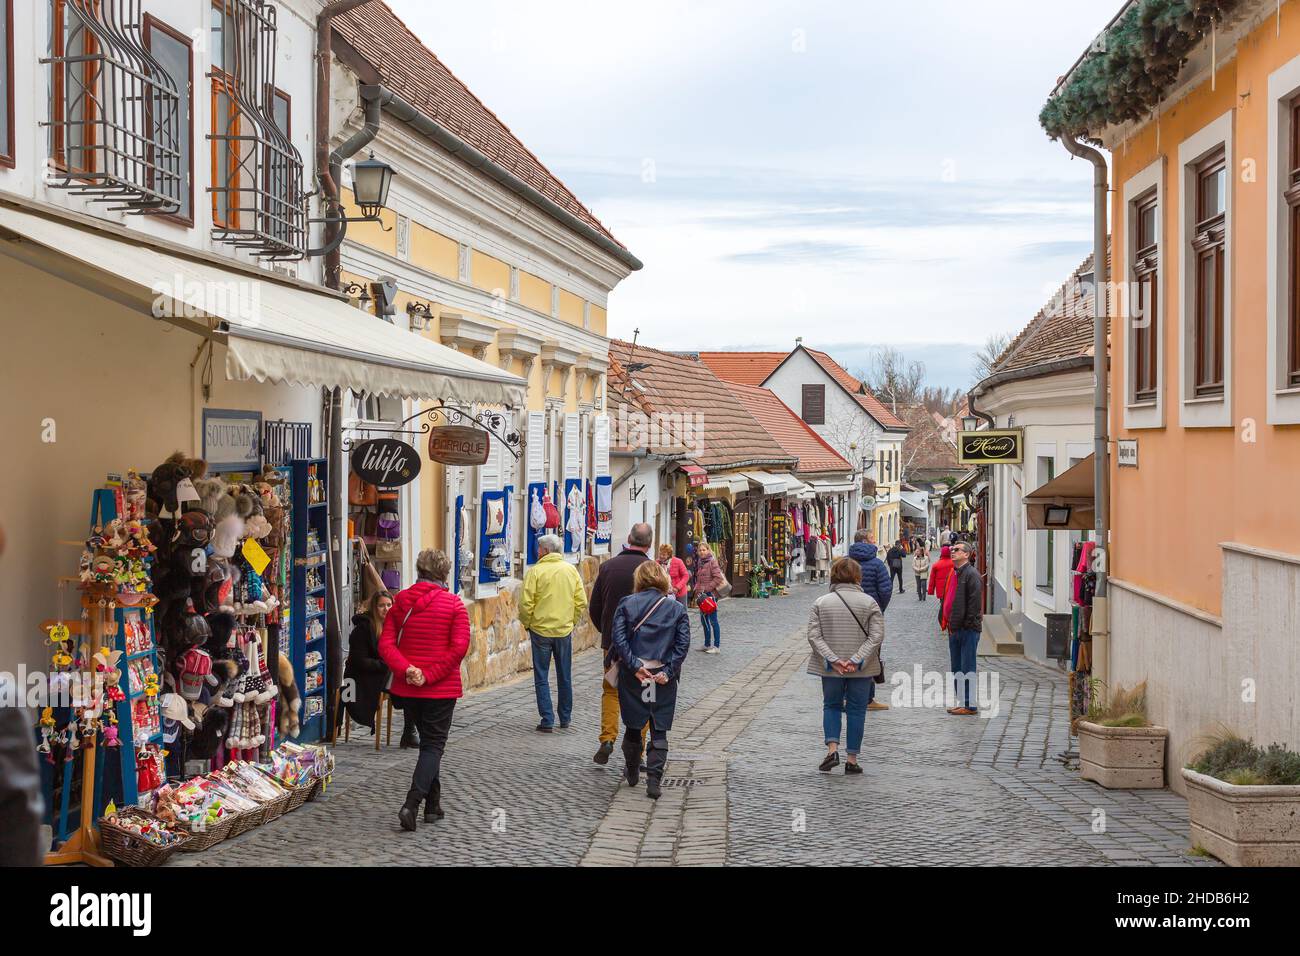 Szentendre, Hungary - March 10, 2019: Tourists walk along cozy street with souvenir shops Stock Photo